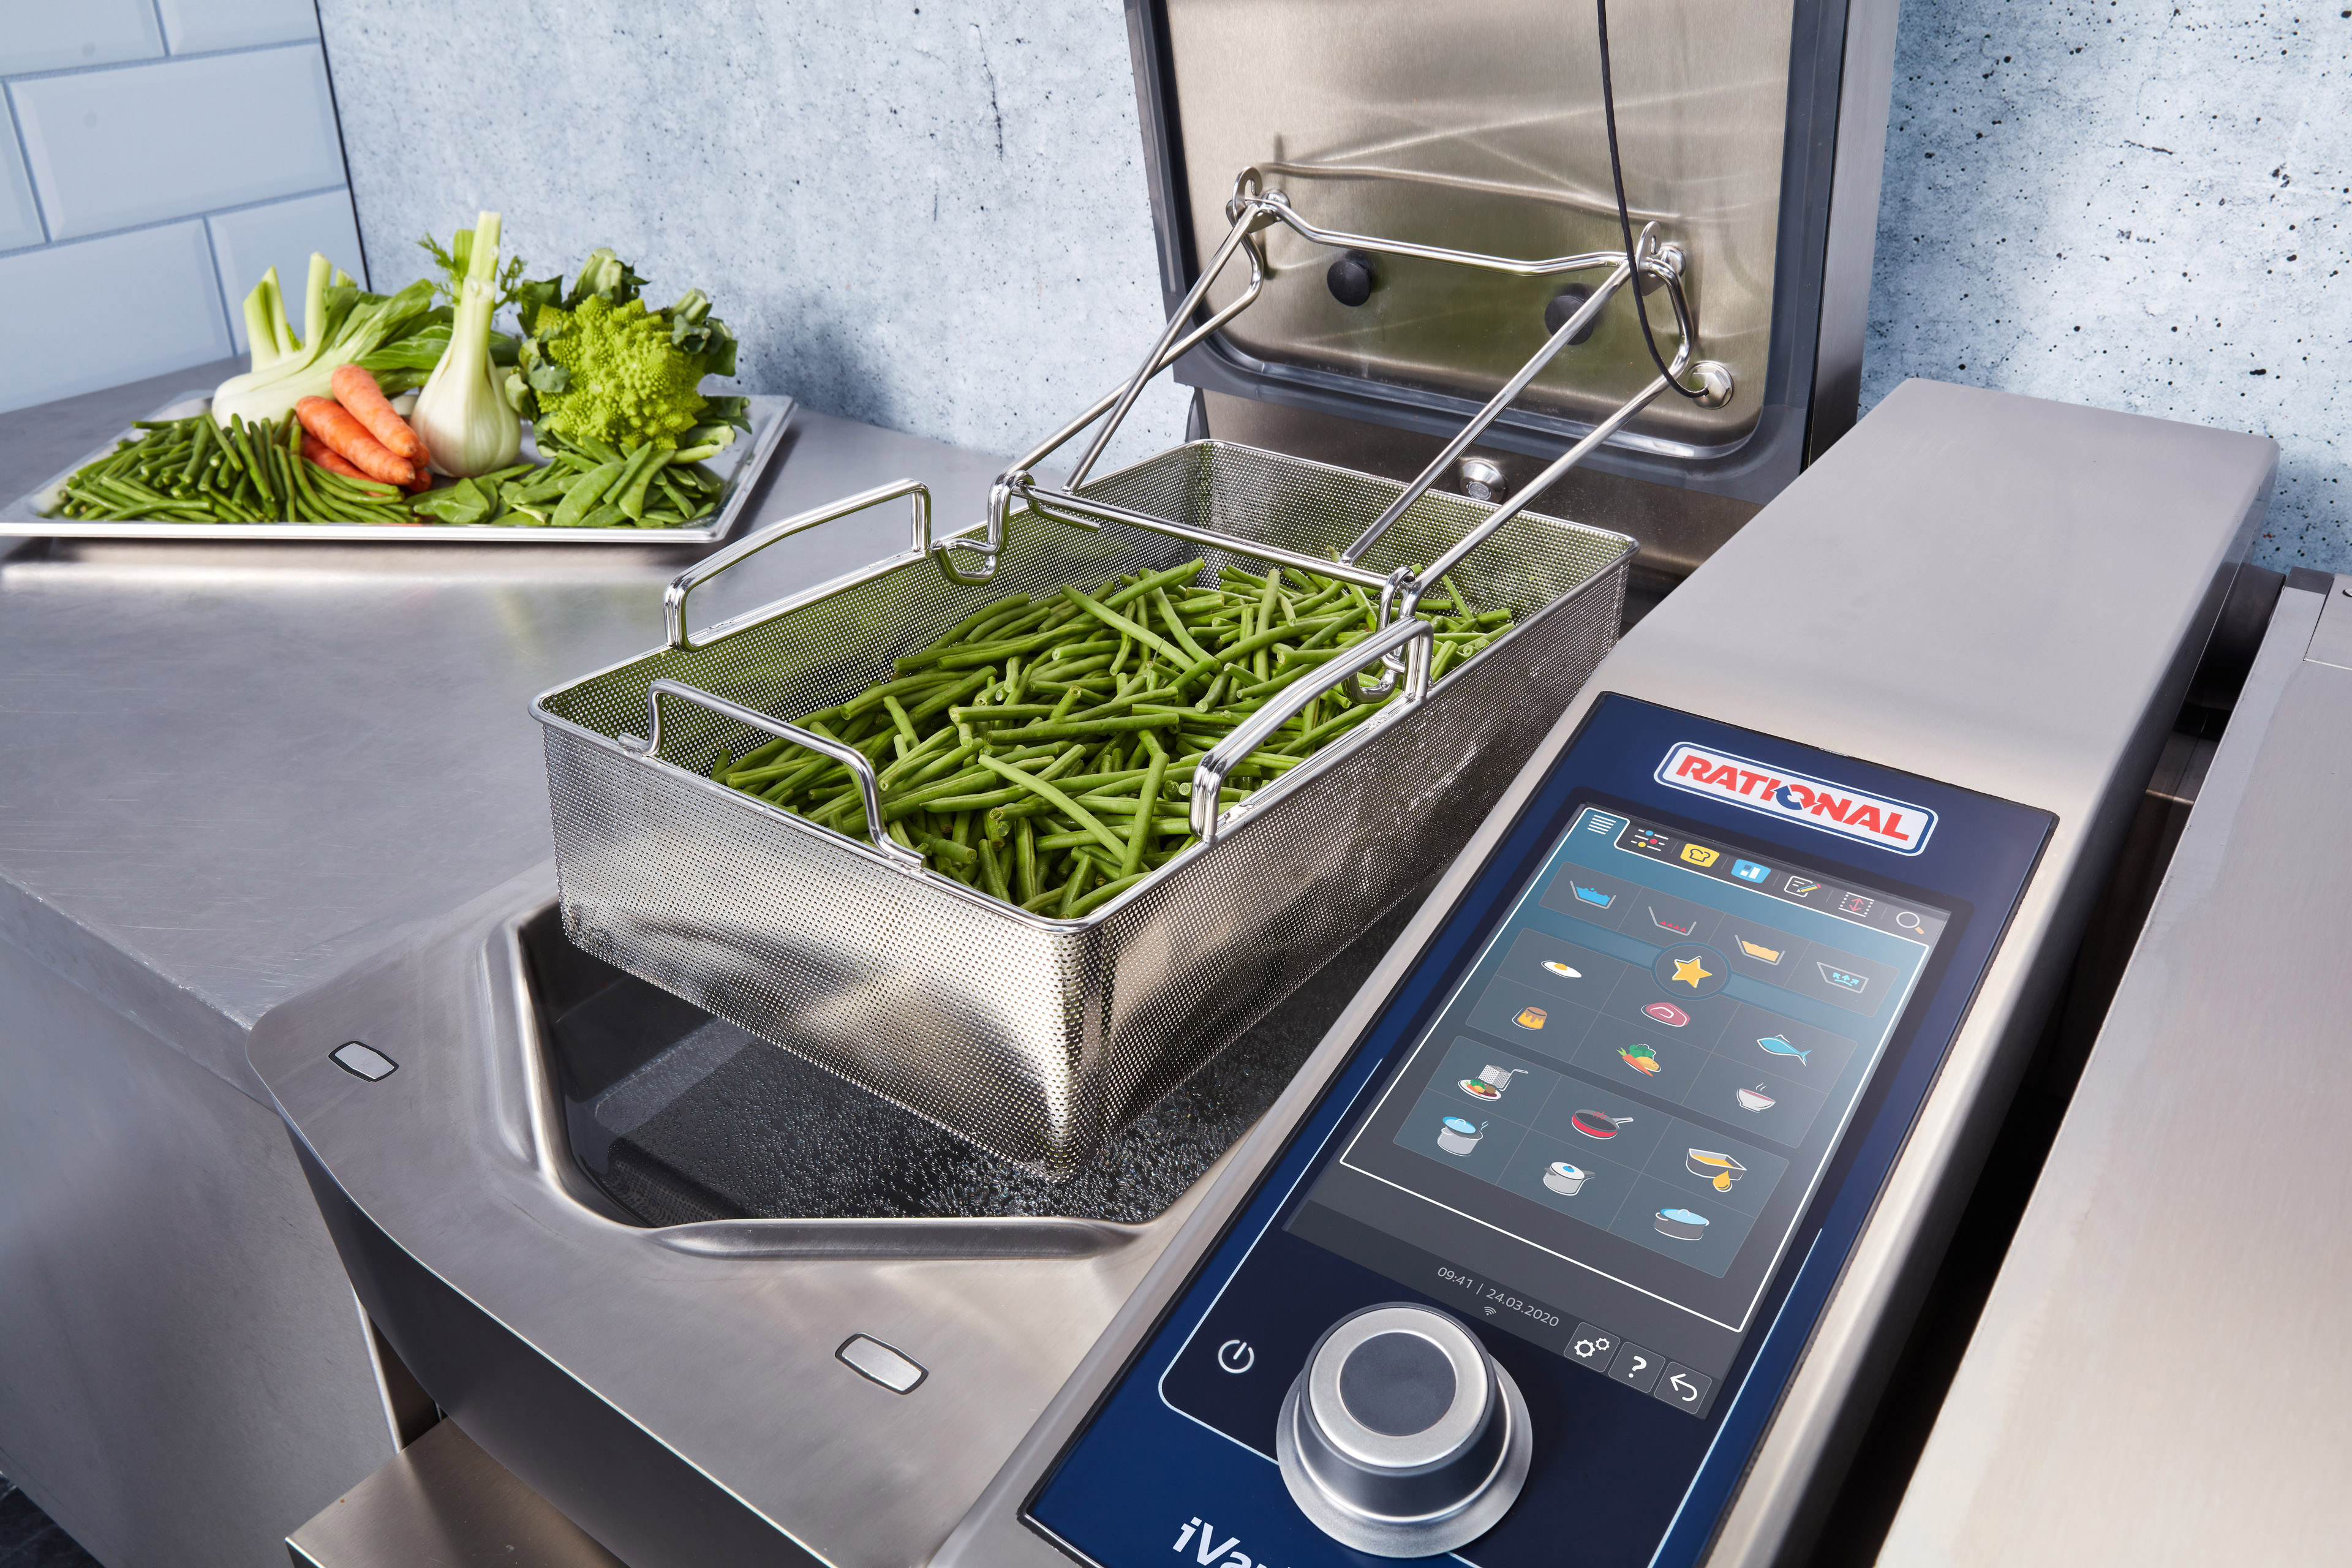 iVario’s intelligent ergonomics make kitchens safer and more efficient  